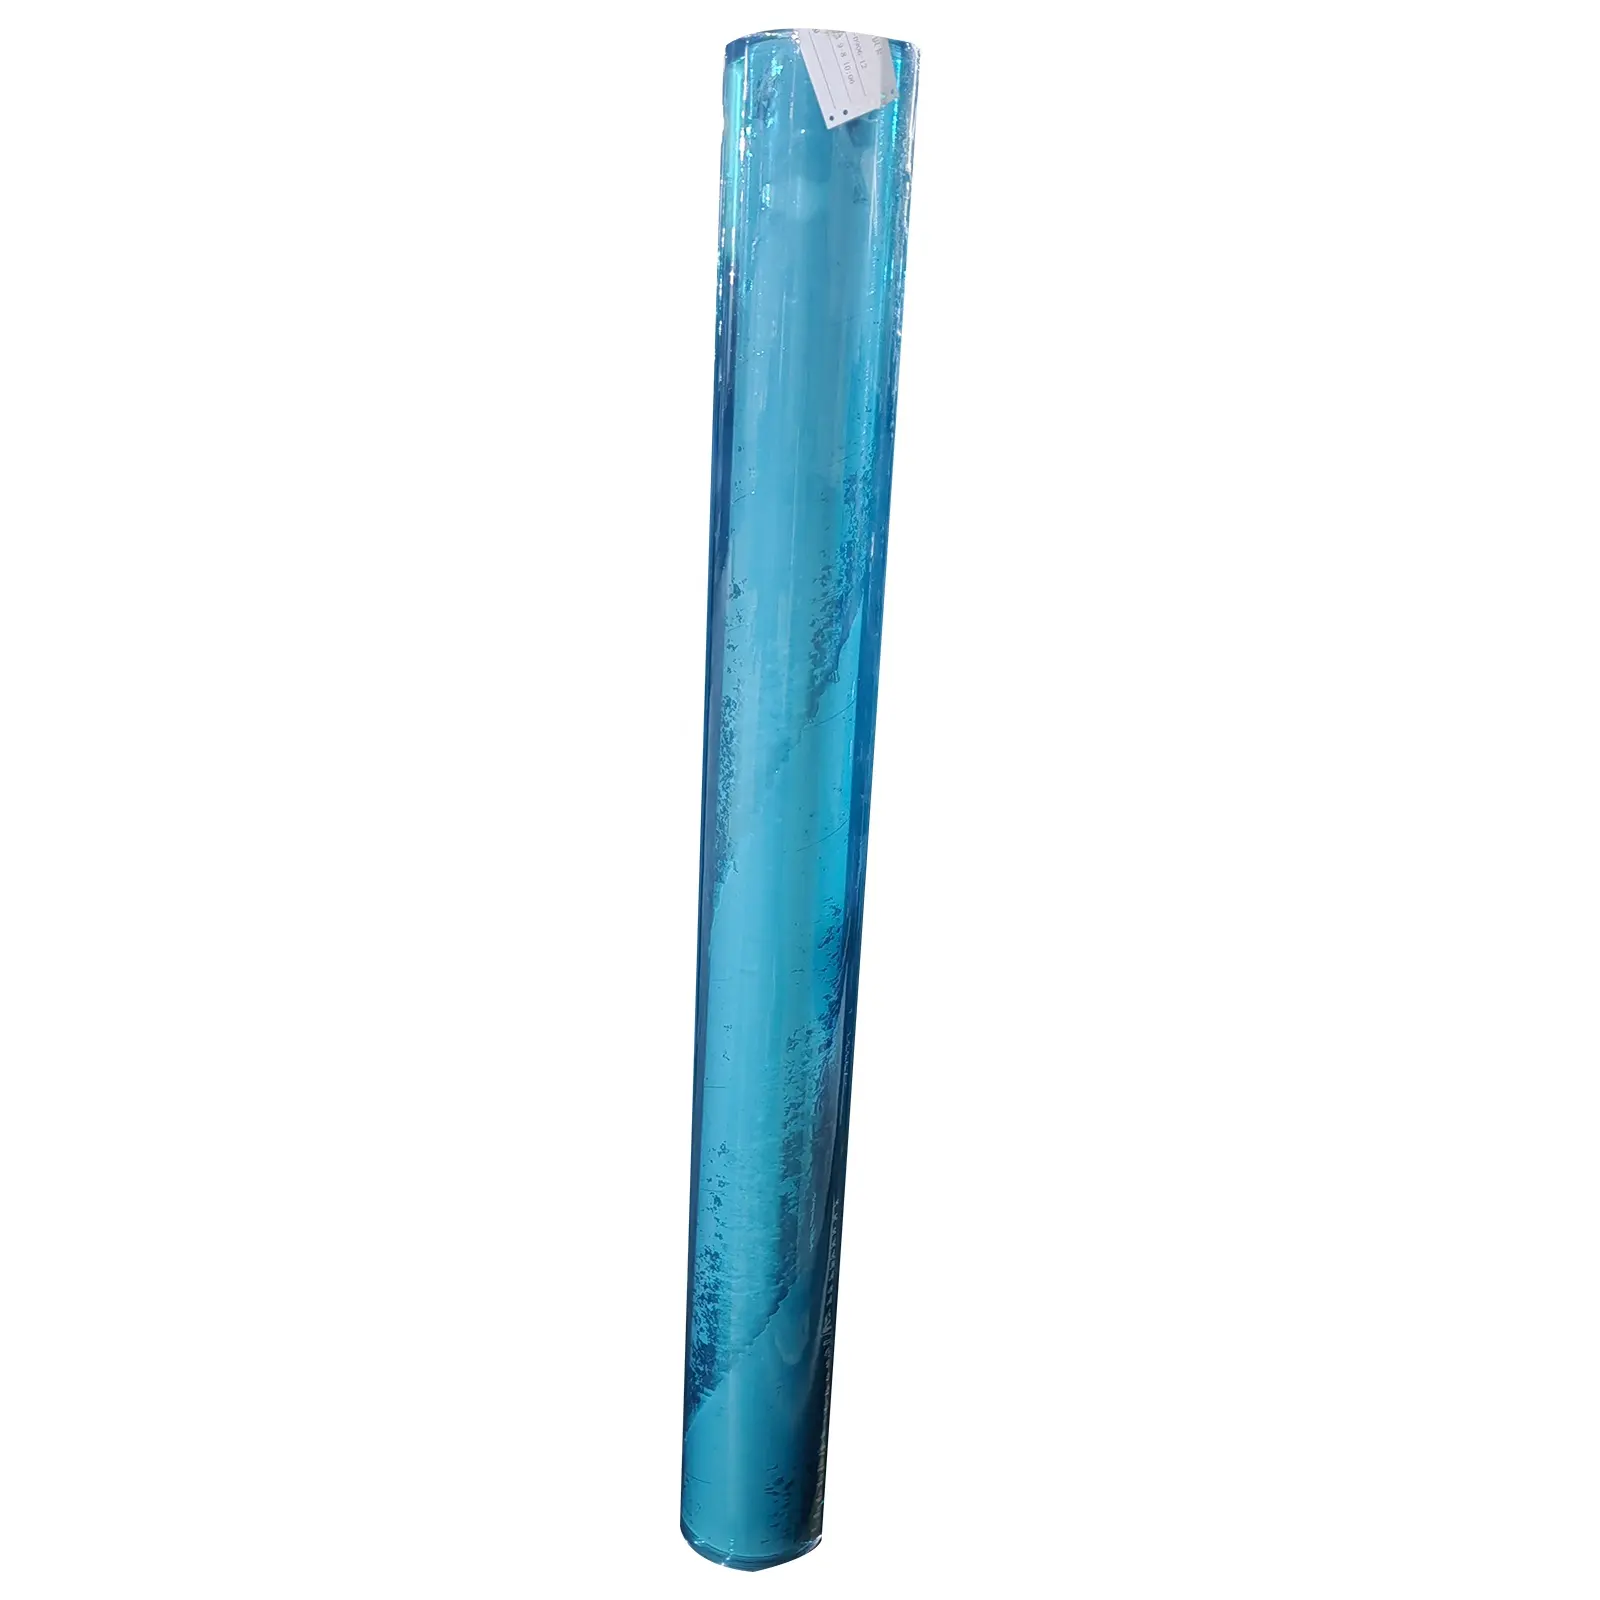 Película de Pvc súper transparente azul claro de moda Anti-UV 0,08 Mm -5 rollo transparente de Pvc precio de fábrica hoja de cristal